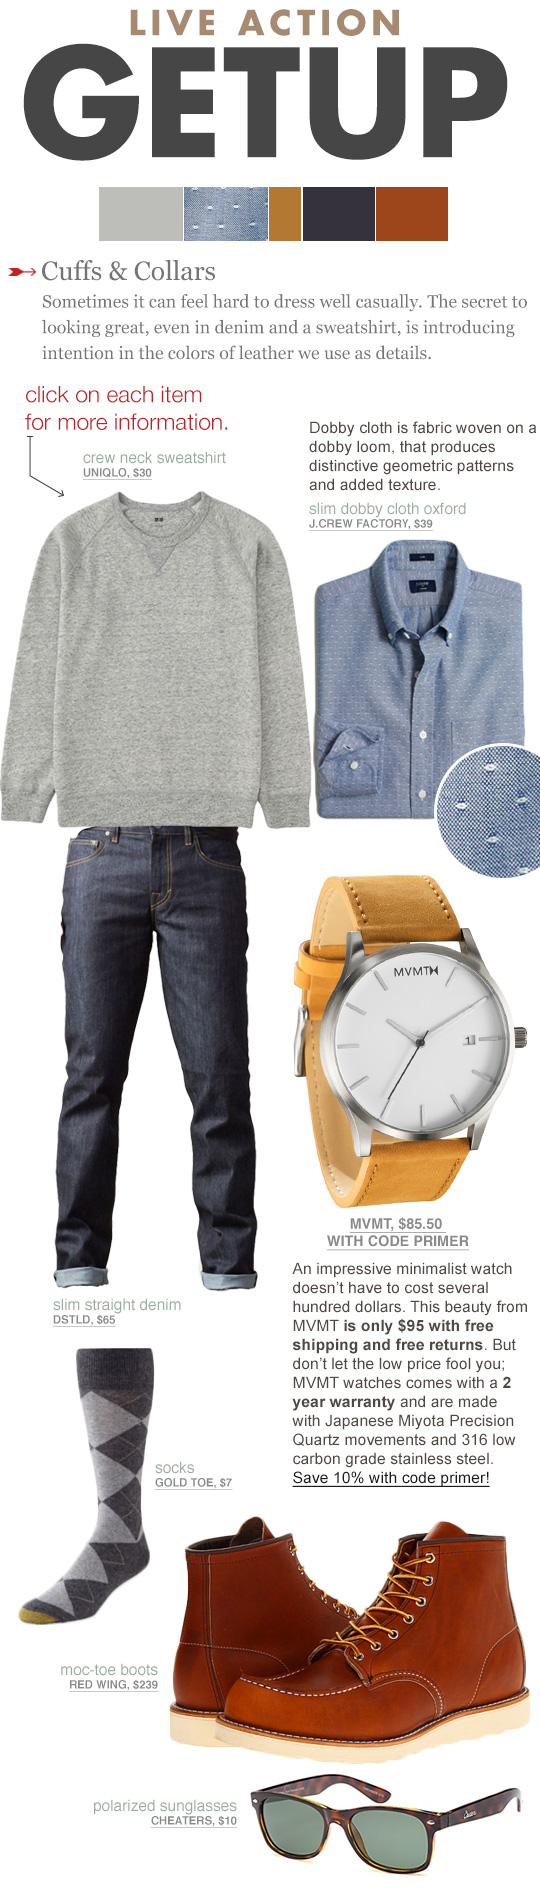 Getup outfit inspiration - gray sweatshirt, blue shirt, jeans, tan watch